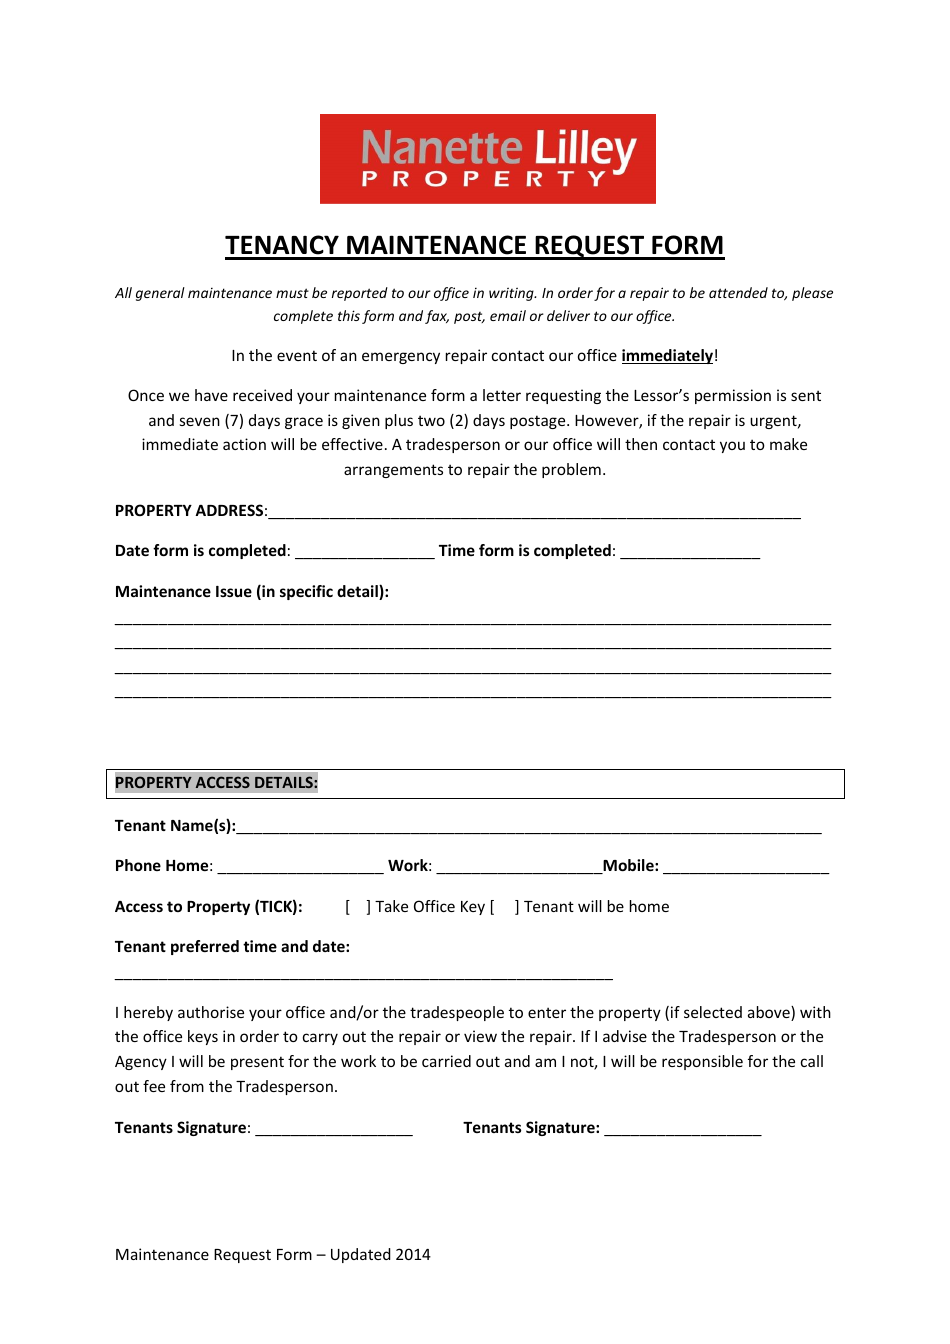 Tenancy Maintenance Request Form - Nanette Lilley Property, Page 1